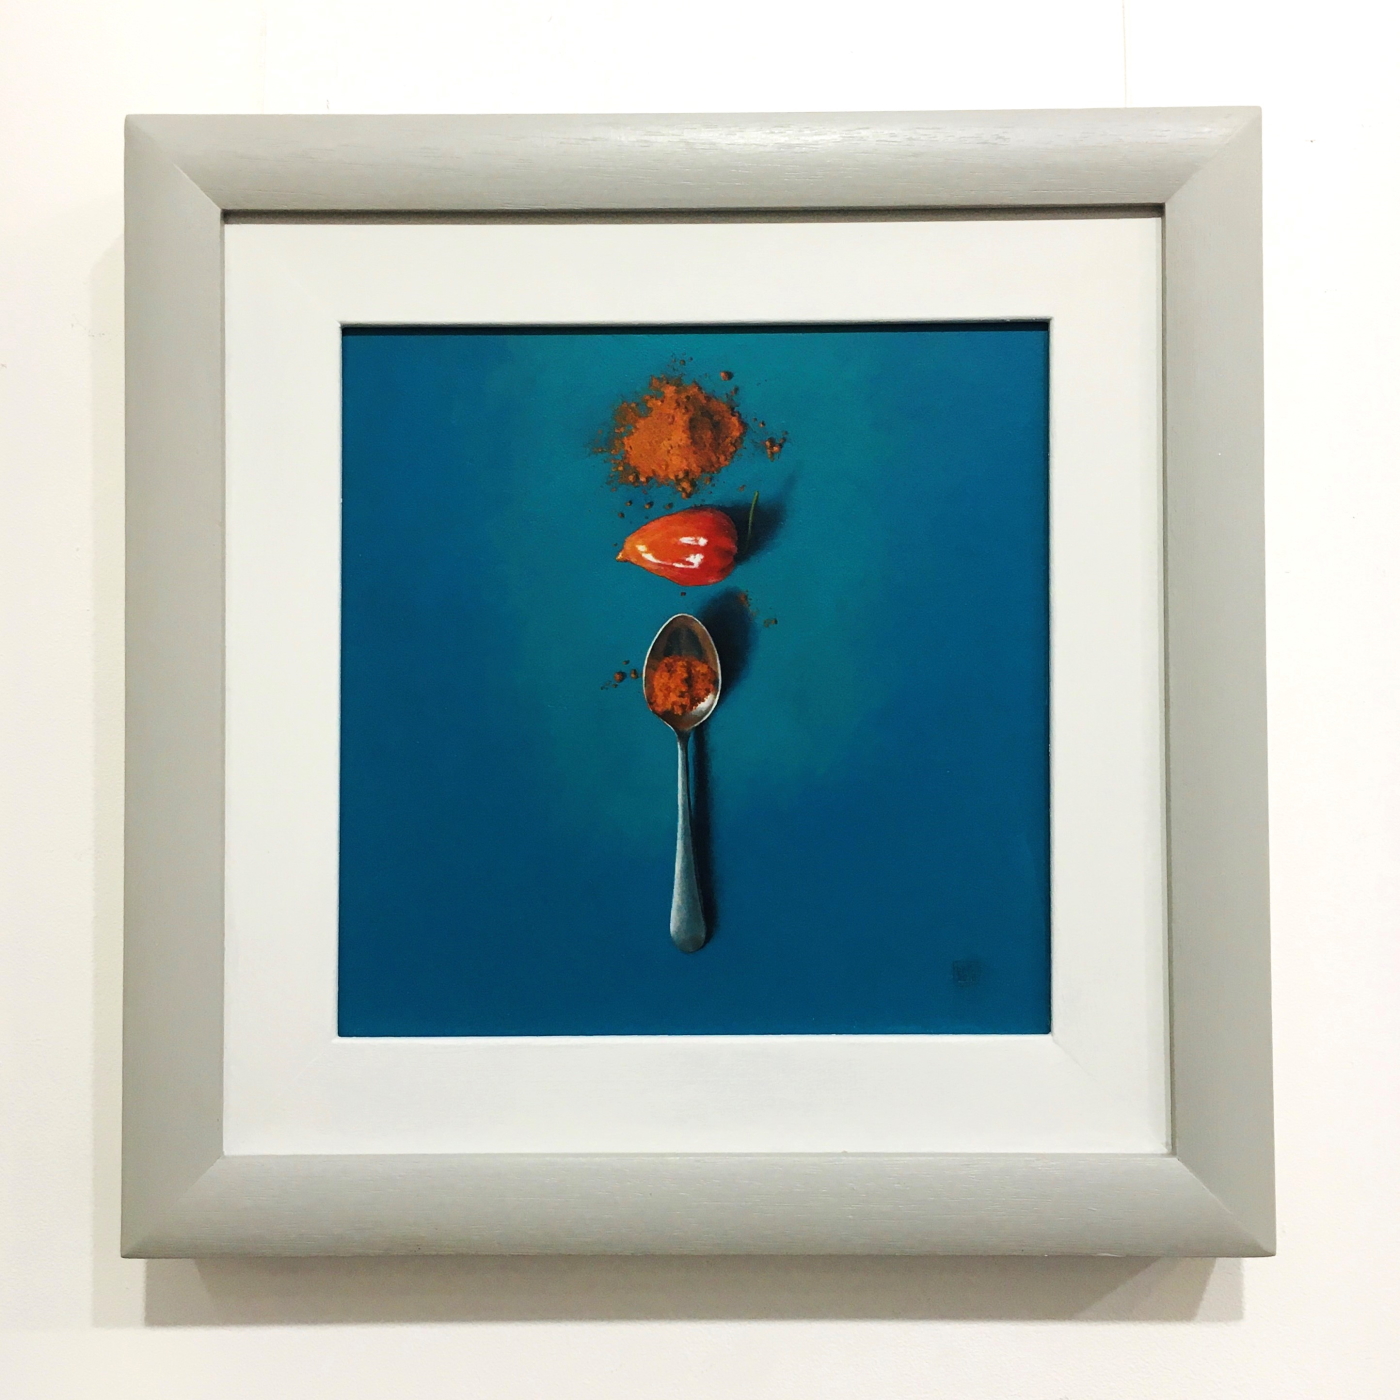 'Chilli, Spoon' by artist David Gleeson